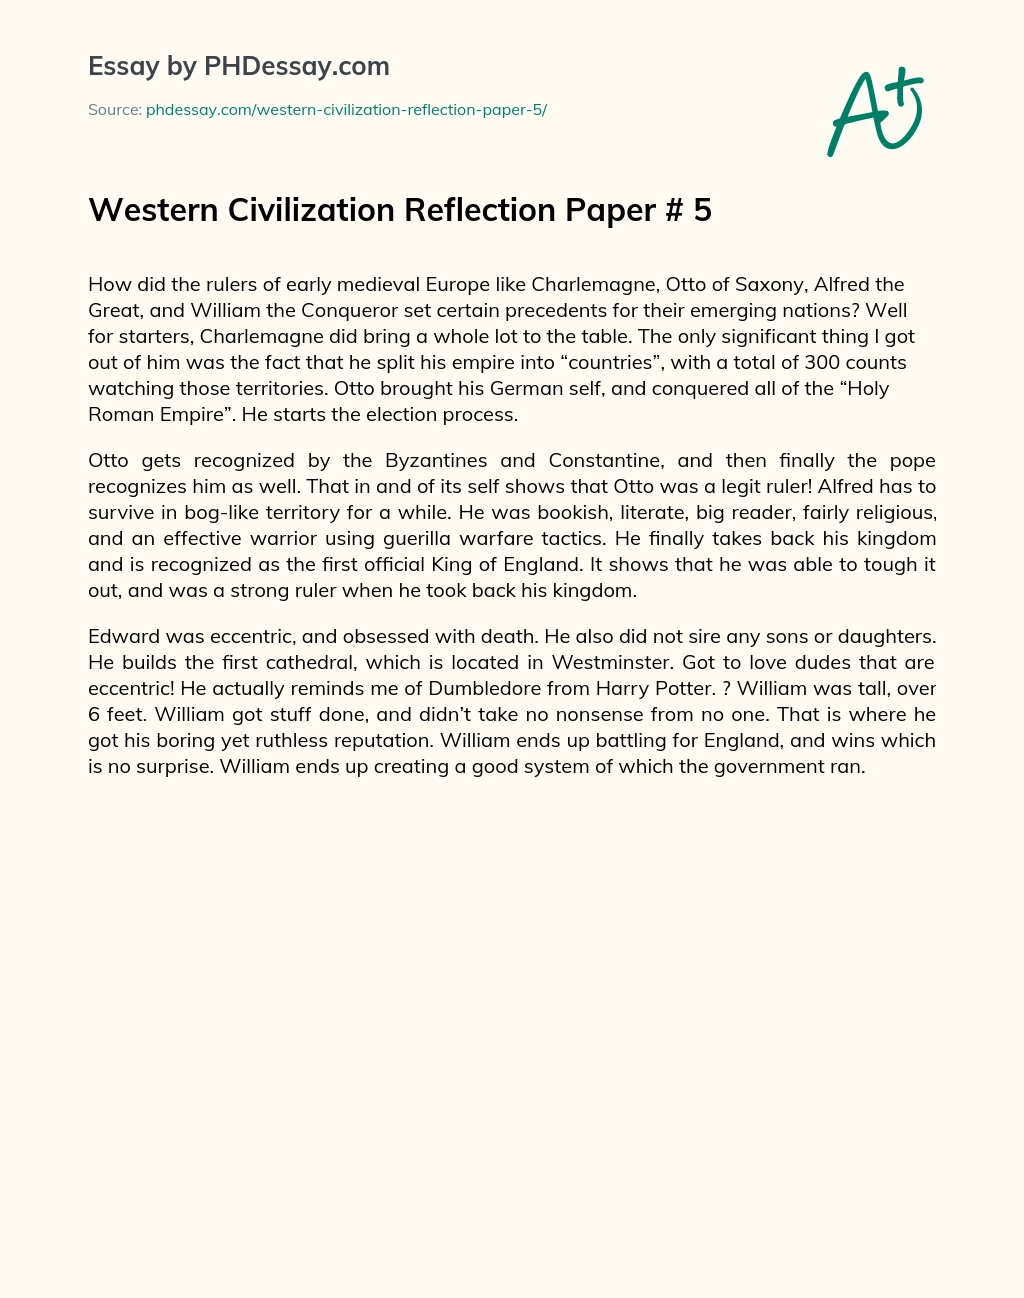 Western Civilization Reflection Paper # 5 essay